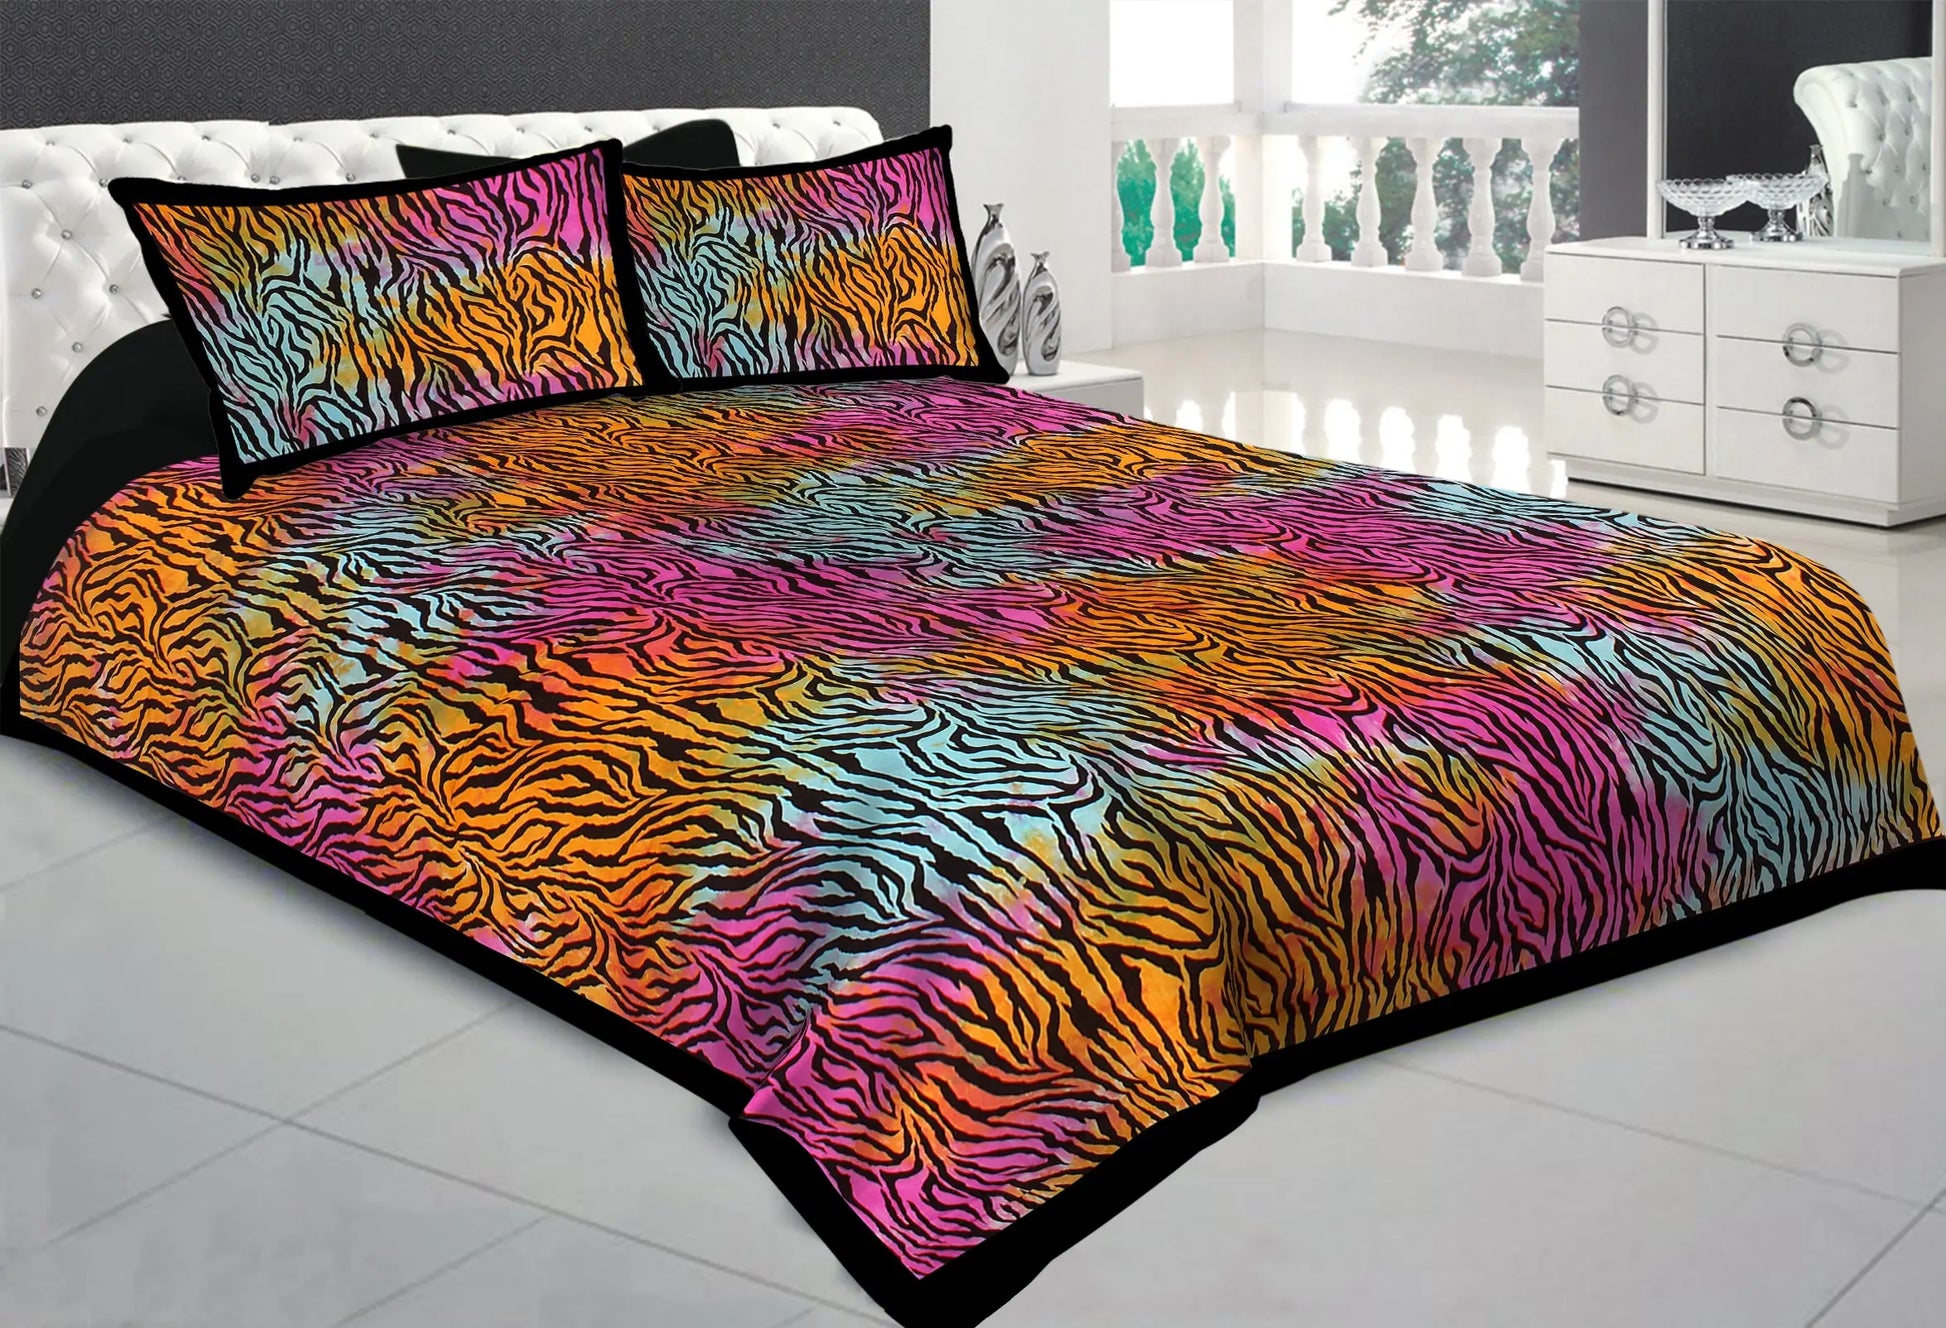 Jaipuri colorful Black and White AutoLoom Tye Dye 100% Cotton Bedsheet 280-TC Cotton king Size Bedsheet With 2 Pillow Cover www.jaipurtohome.com